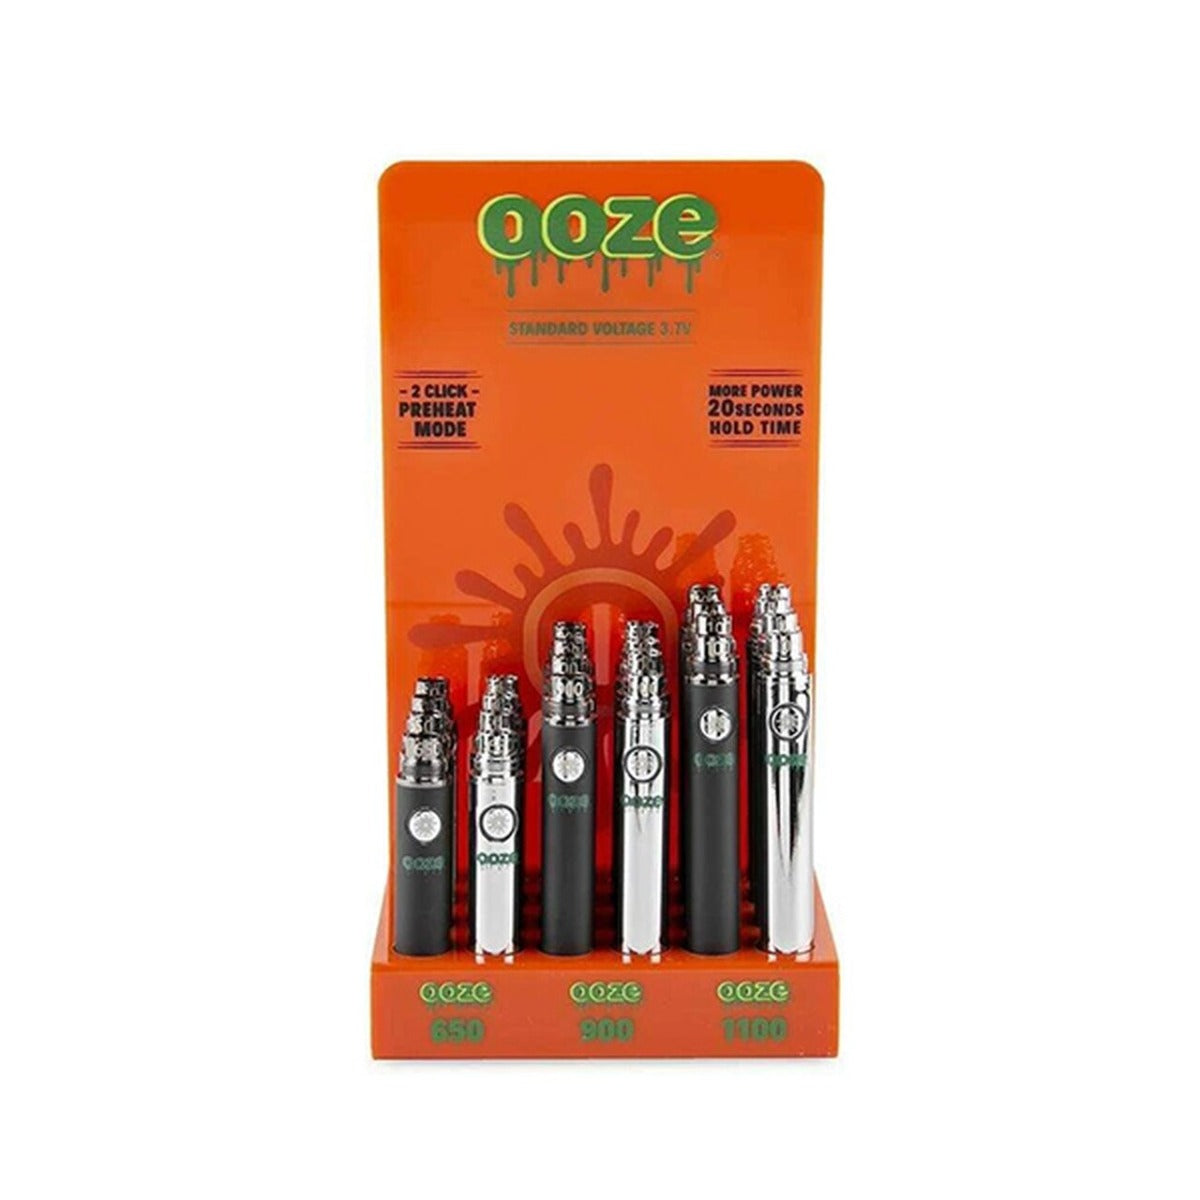 Ooze Vape Battery Display 24 Pack Best 